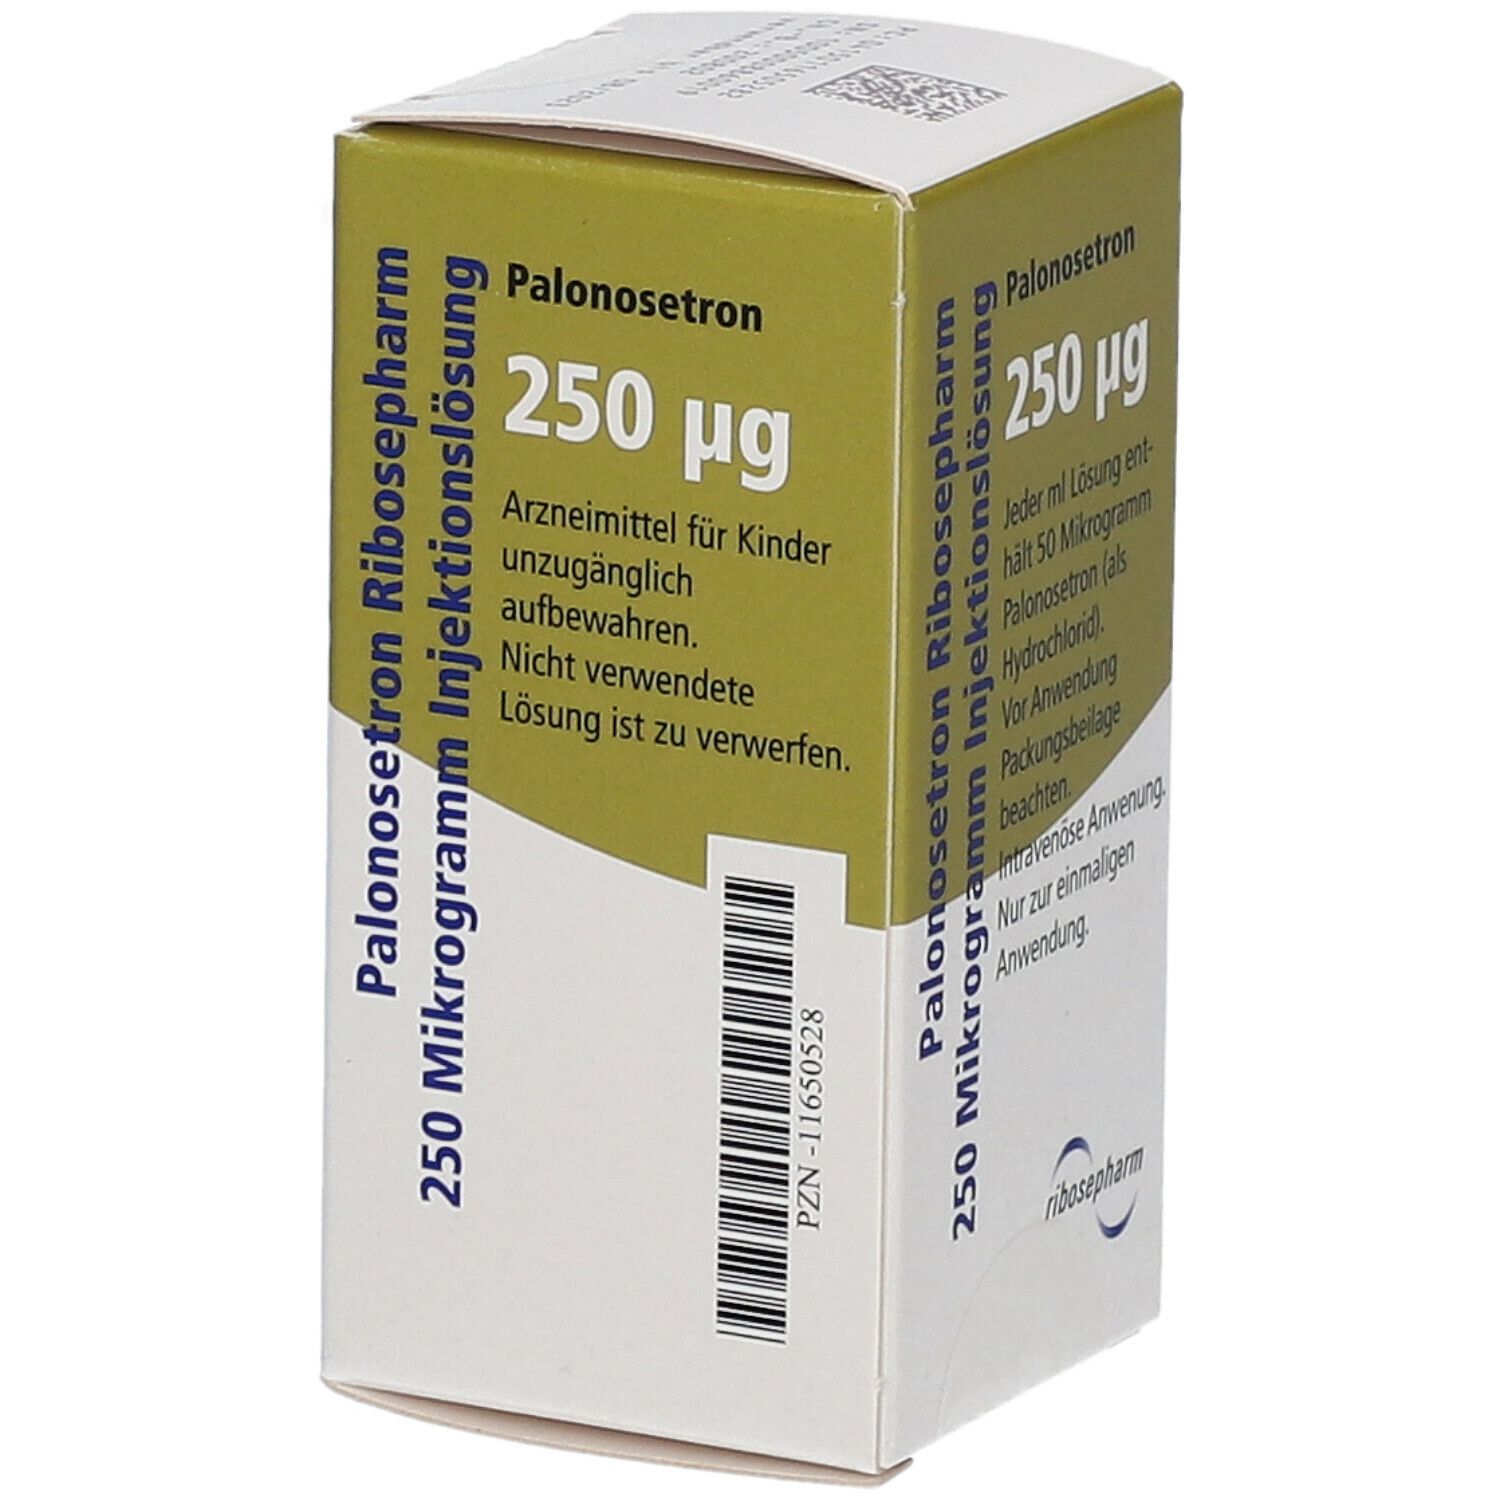 Palonosetron Ribosepharm 25 µg